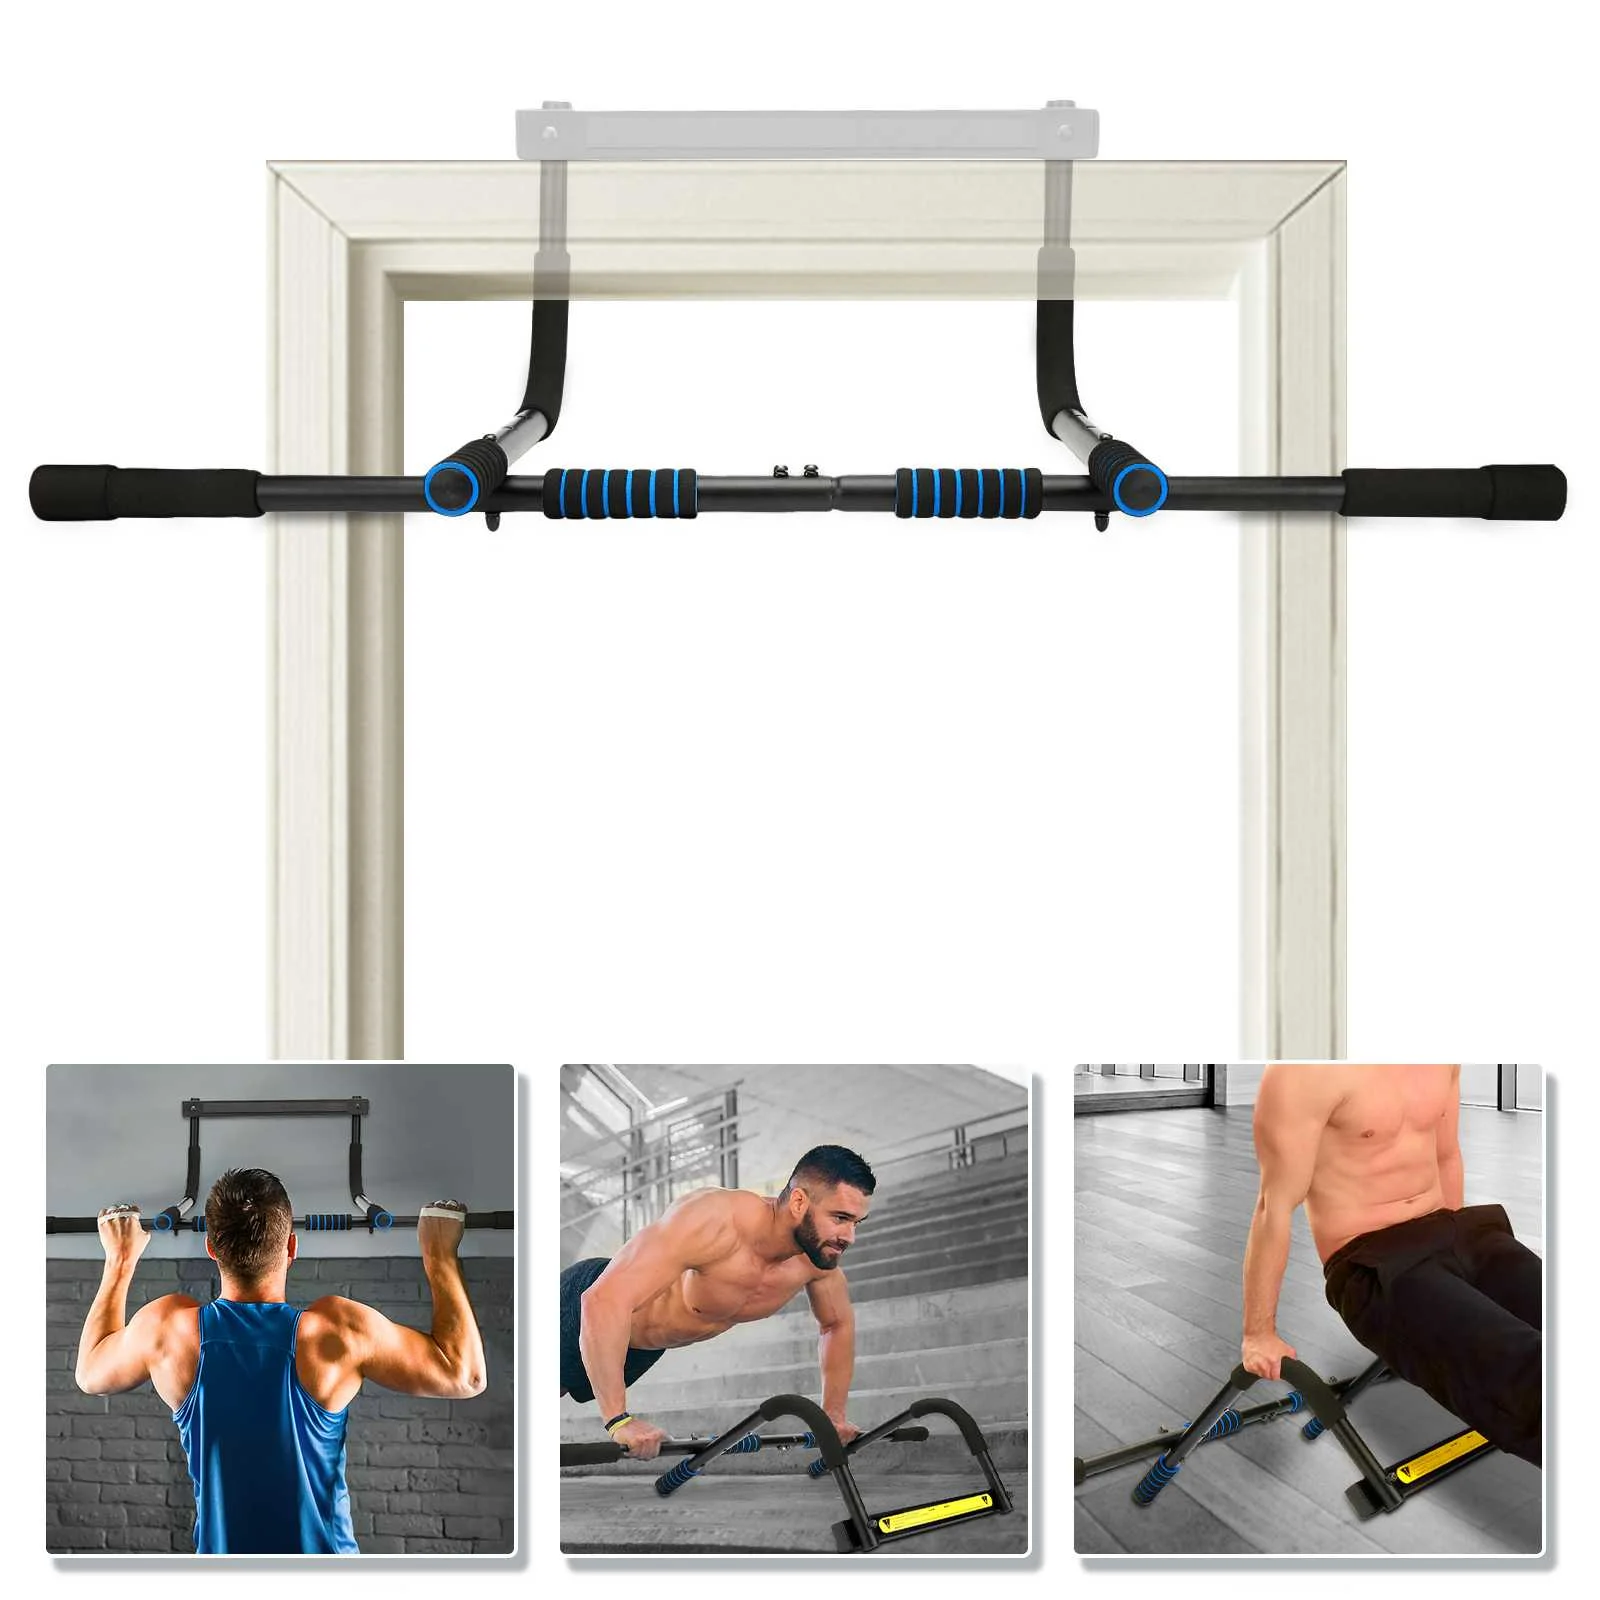 SGODDE 85CM Adjustable Door Frame Pull Up Bar 100KG Without Screws Robust with Foam for Workout Fitness Home Trainer Equipment